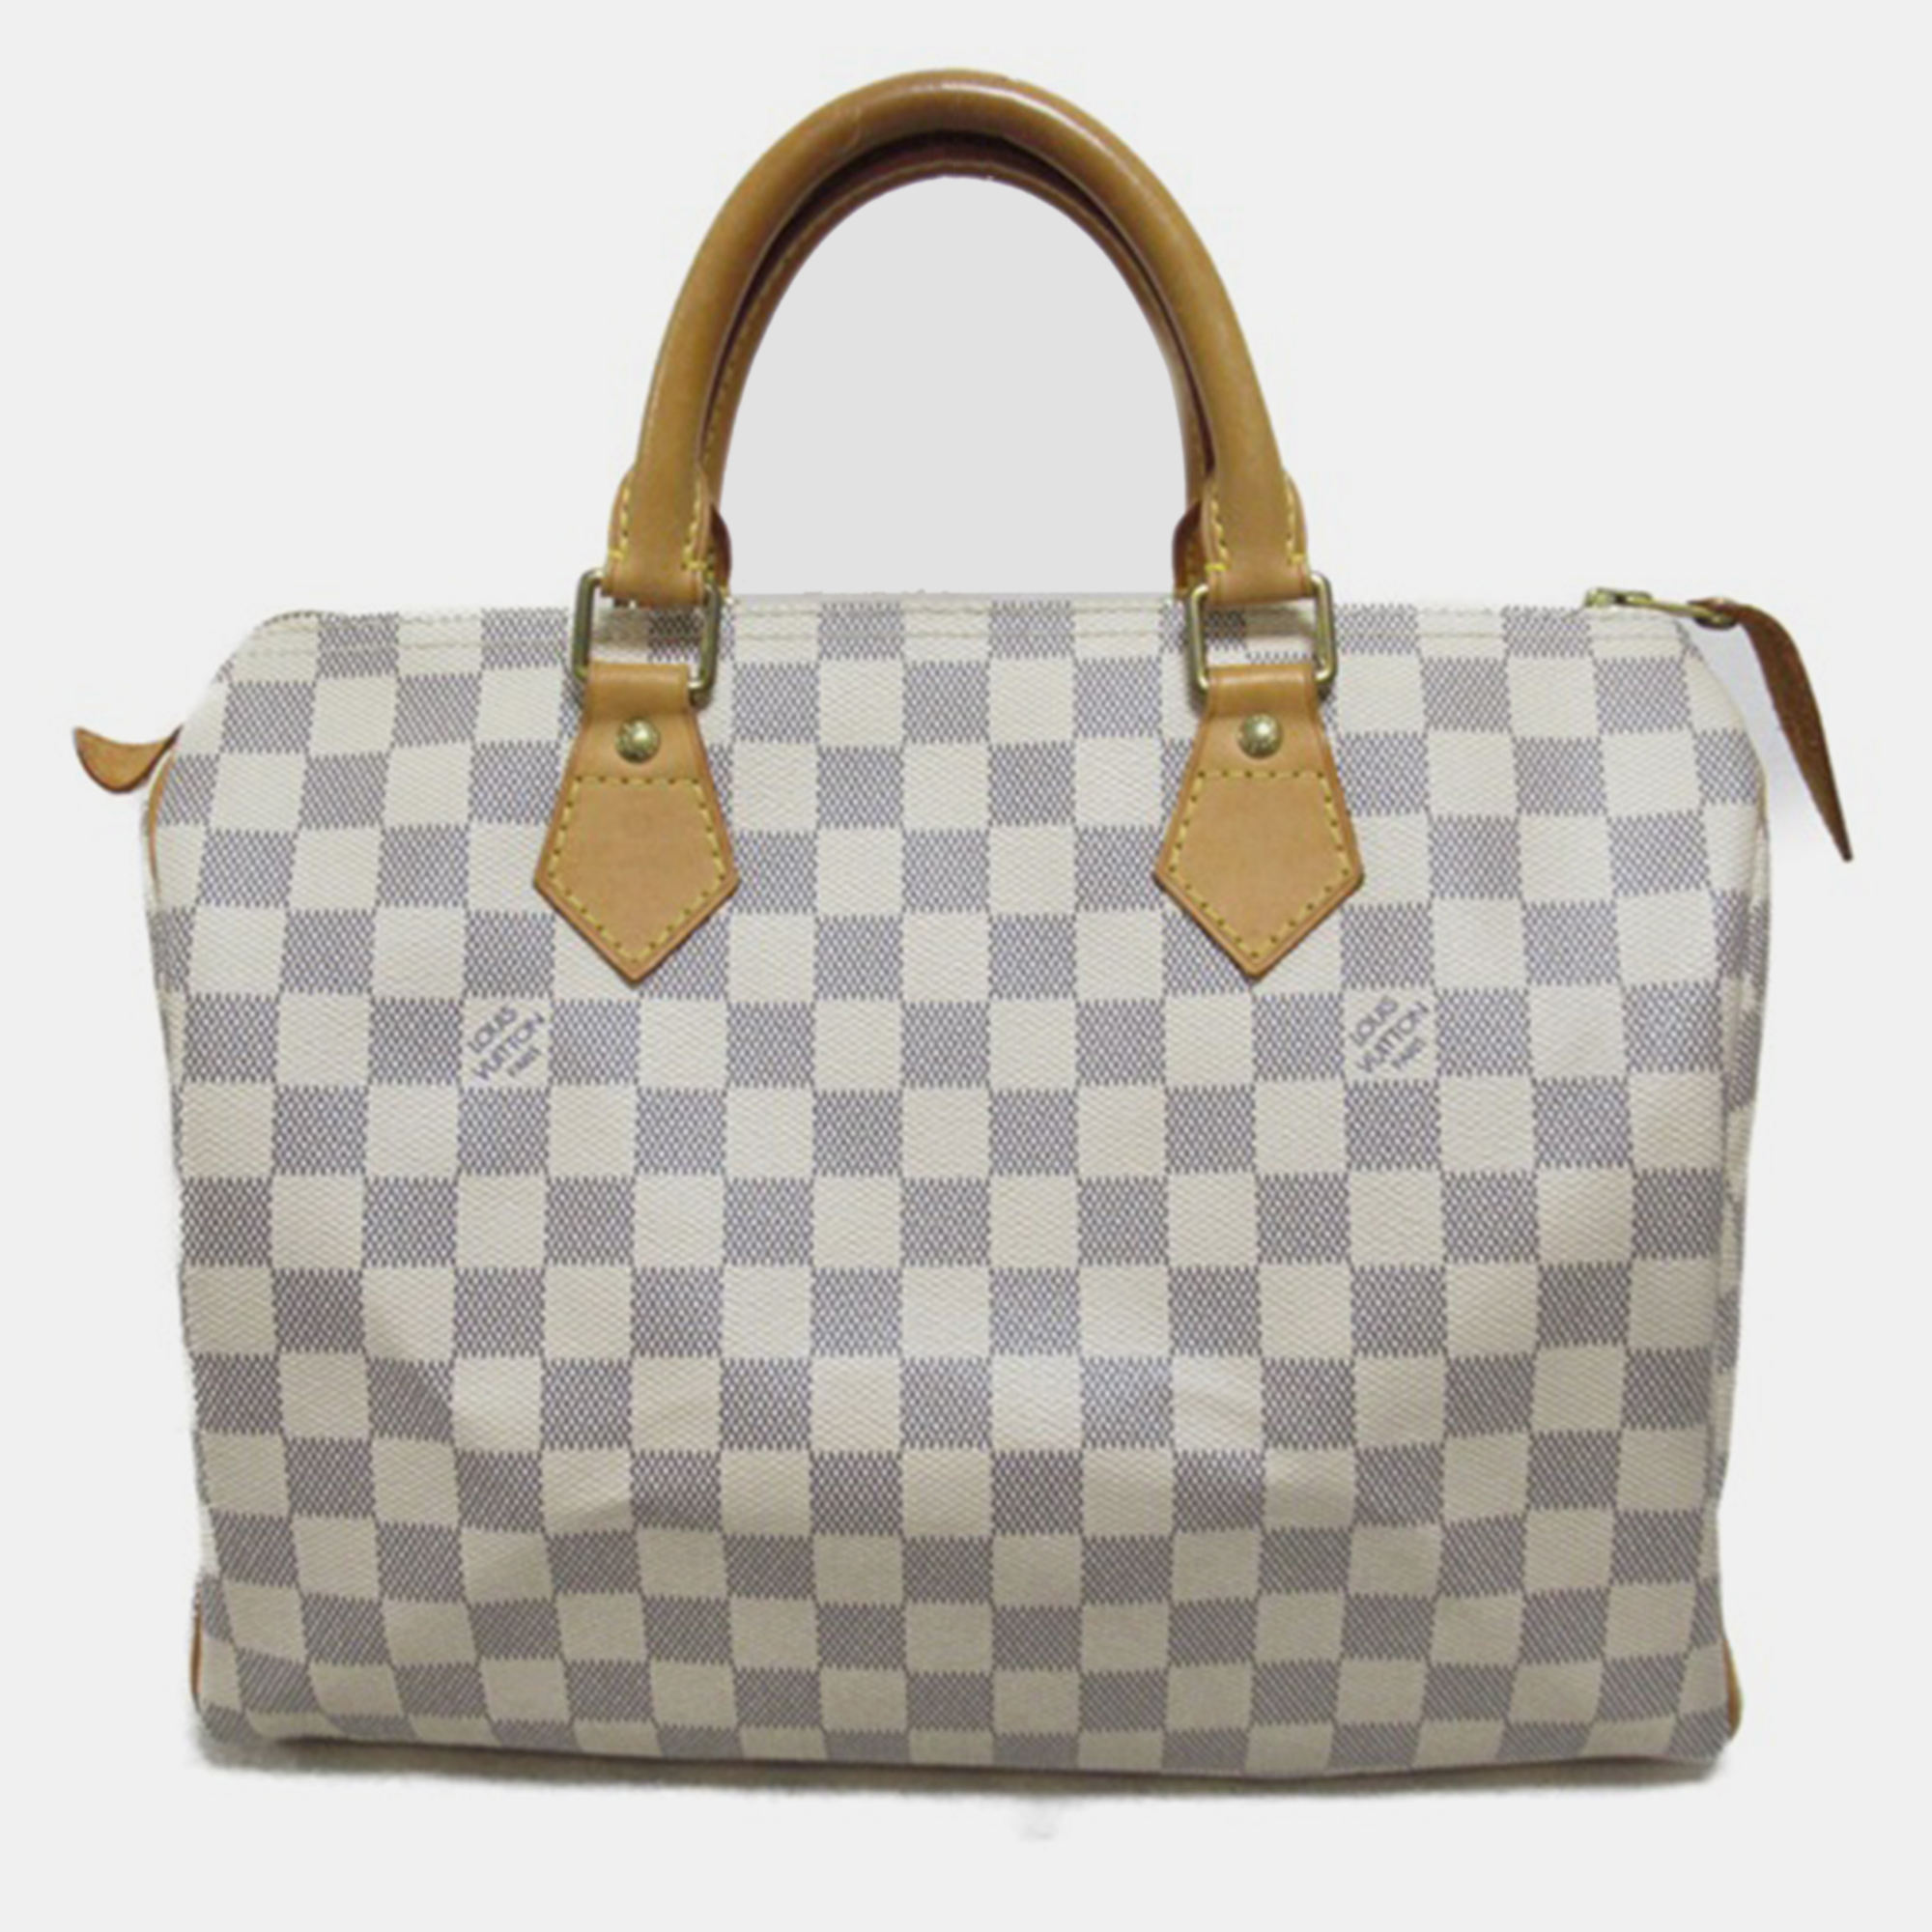 Louis Vuitton White Damier Azur Canvas Speedy 30 Bag